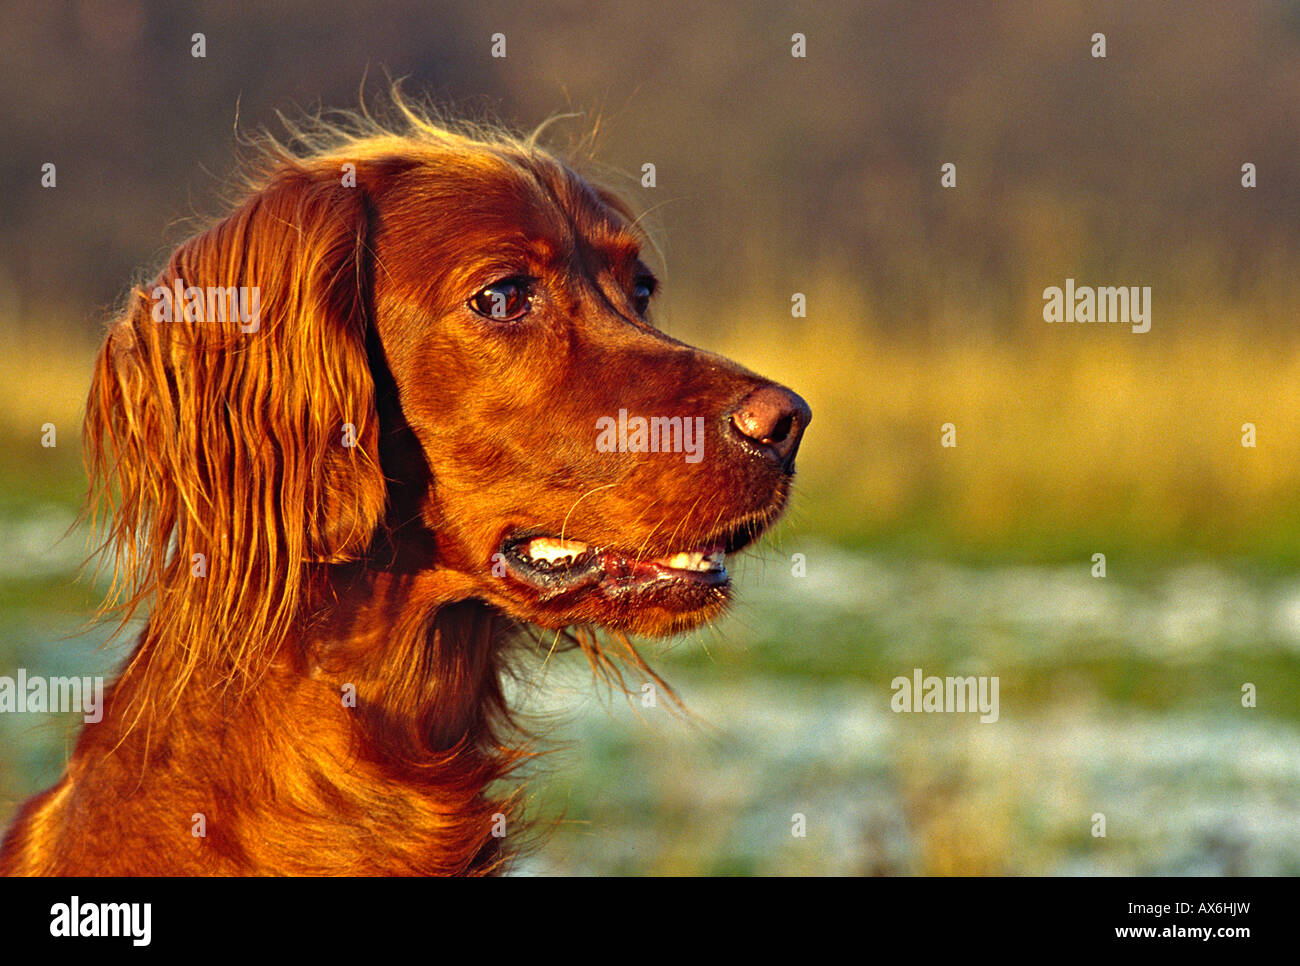 Close-up of Irish Setter dog's face Stock Photo